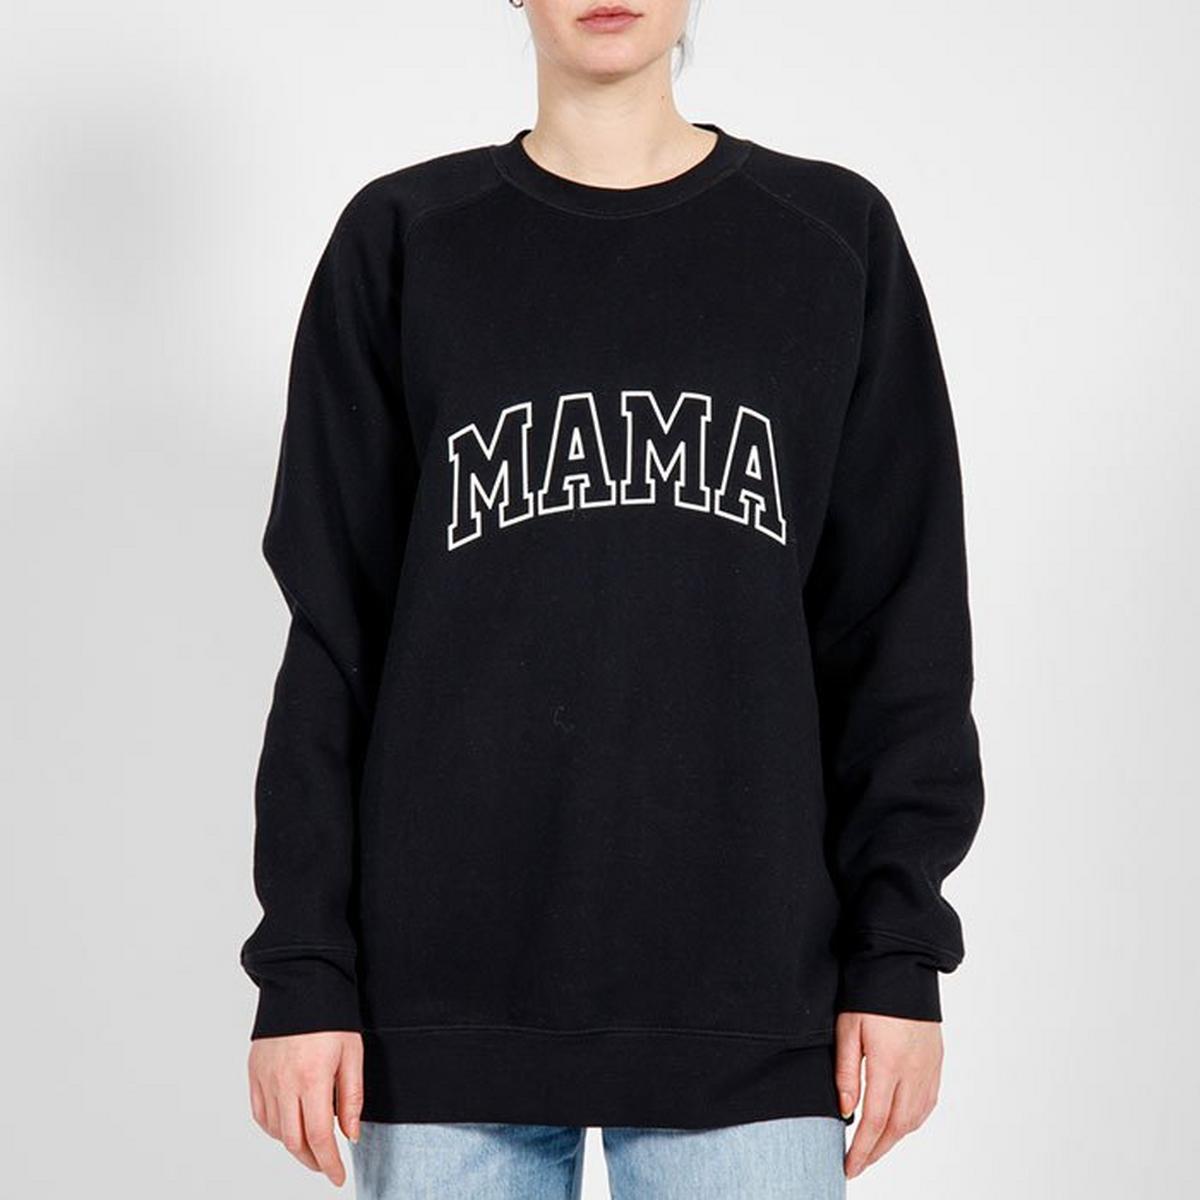 Women's The Mama Big Sister Crew Sweatshirt